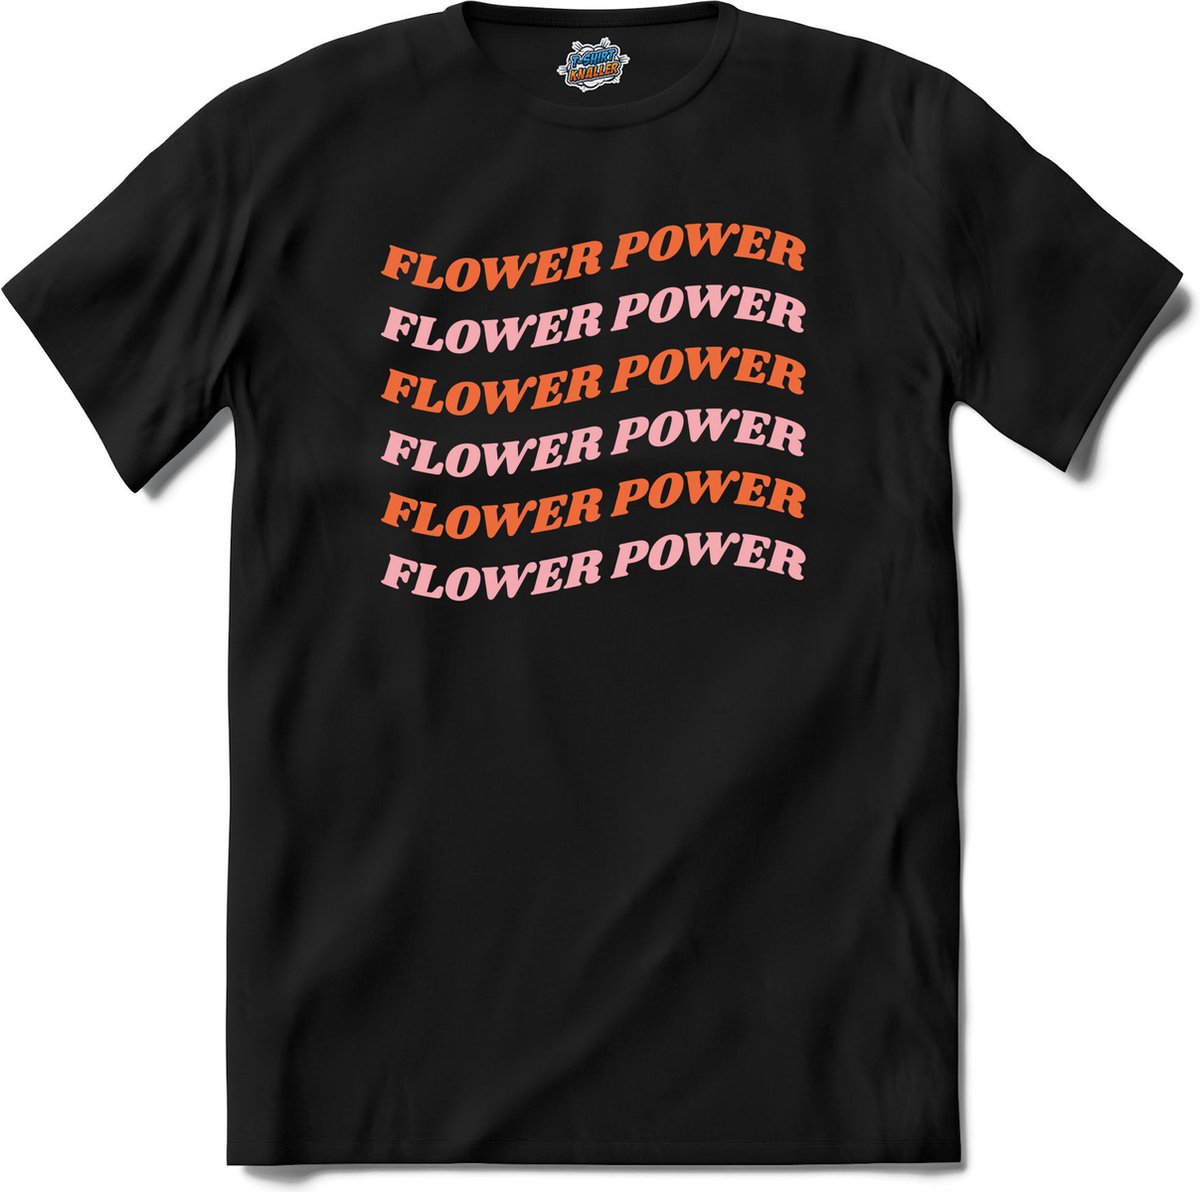 Flower power - T-Shirt - Meisjes - Zwart - Maat 12 jaar